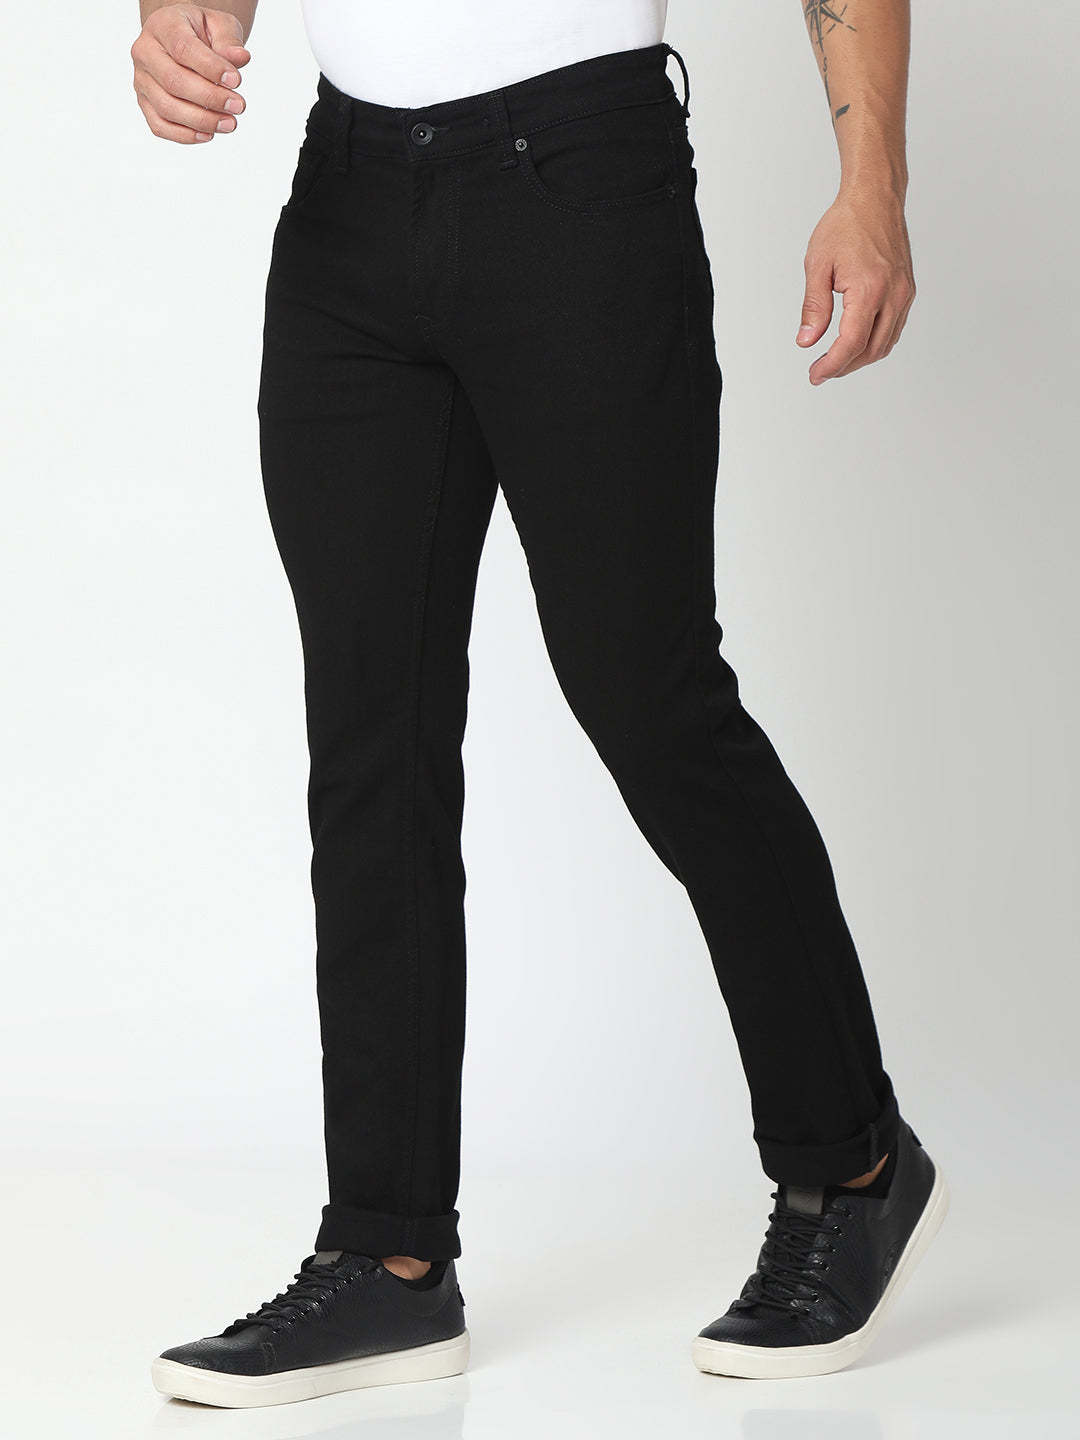 Spykar Black Cotton Regular Fit Narrow Length Jeans For Men (Rover)